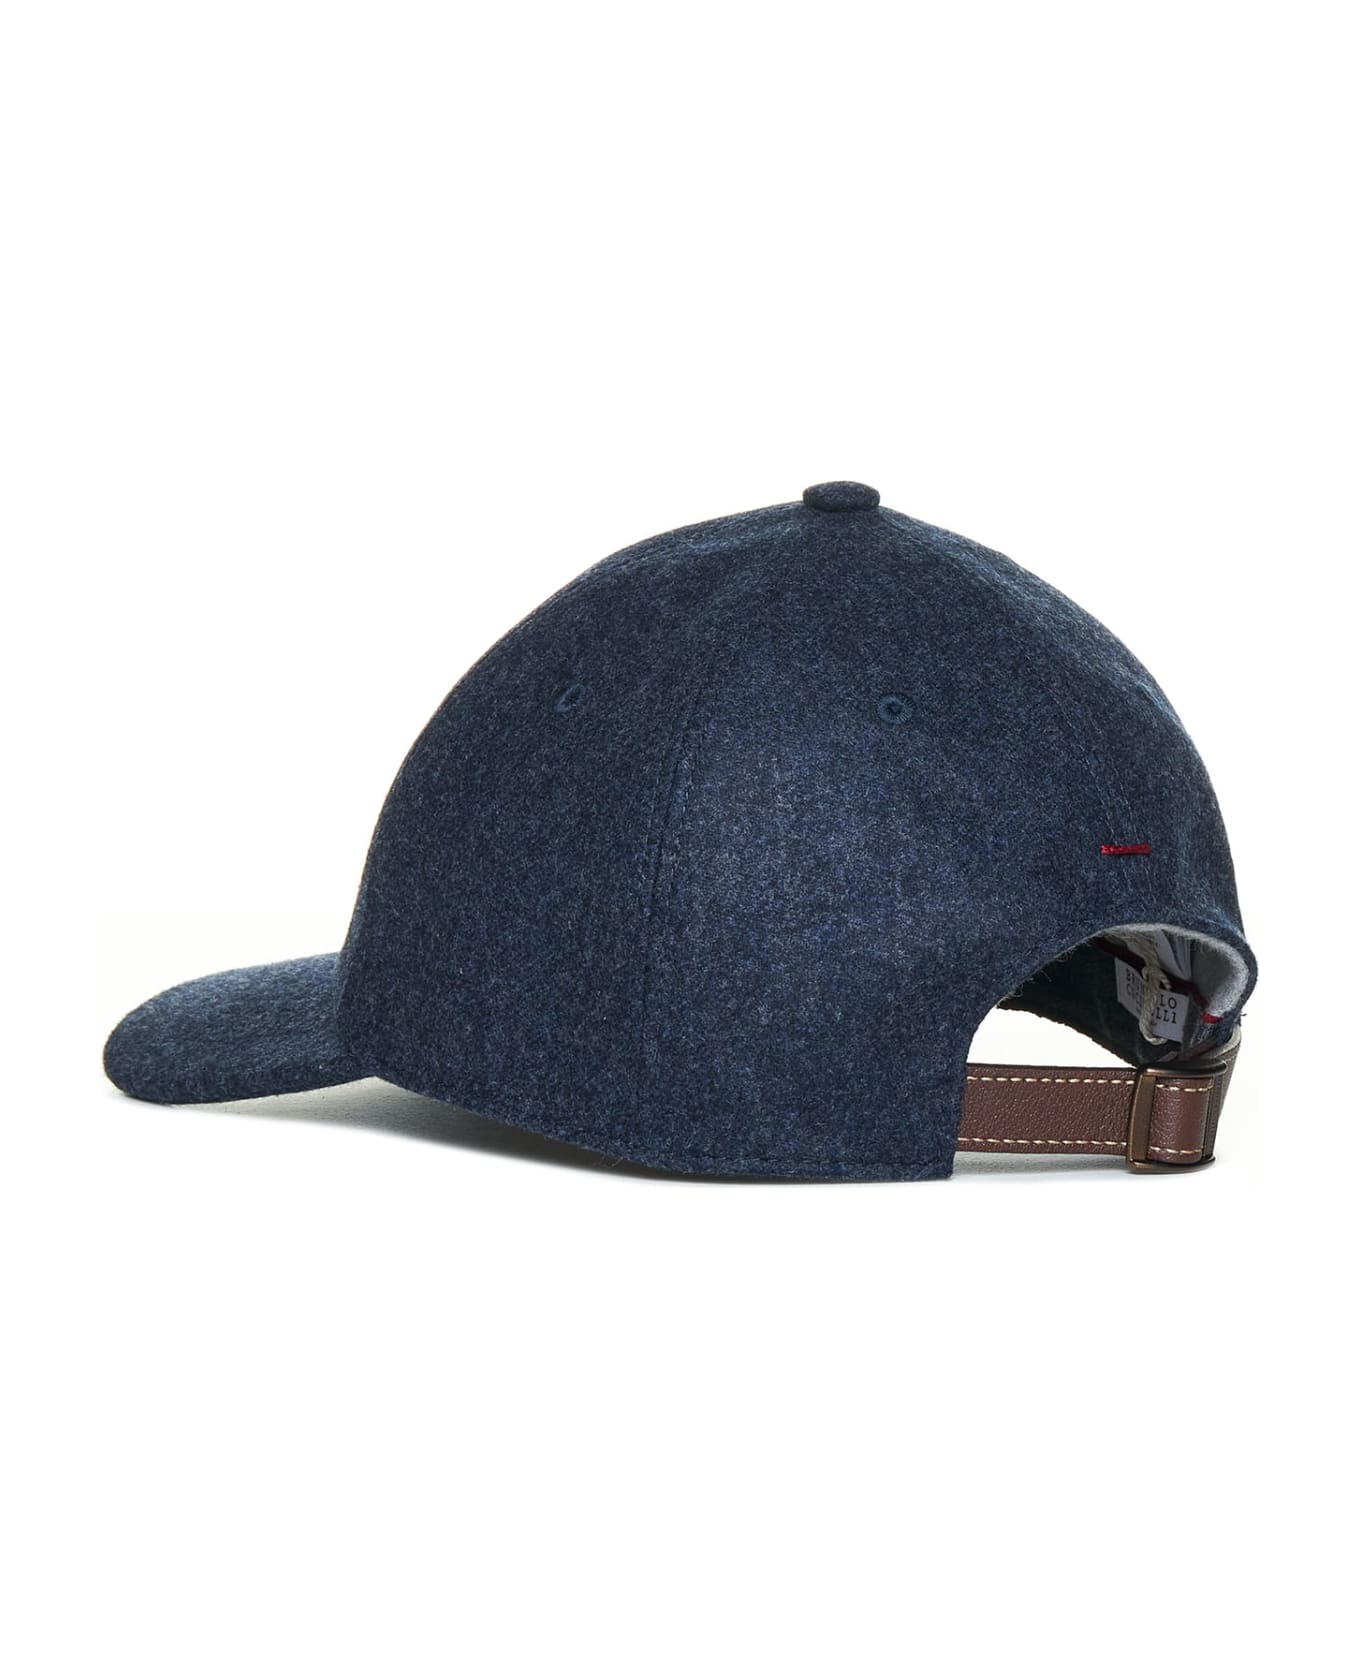 Brunello Cucinelli Logo Baseball Cap - Buio 帽子